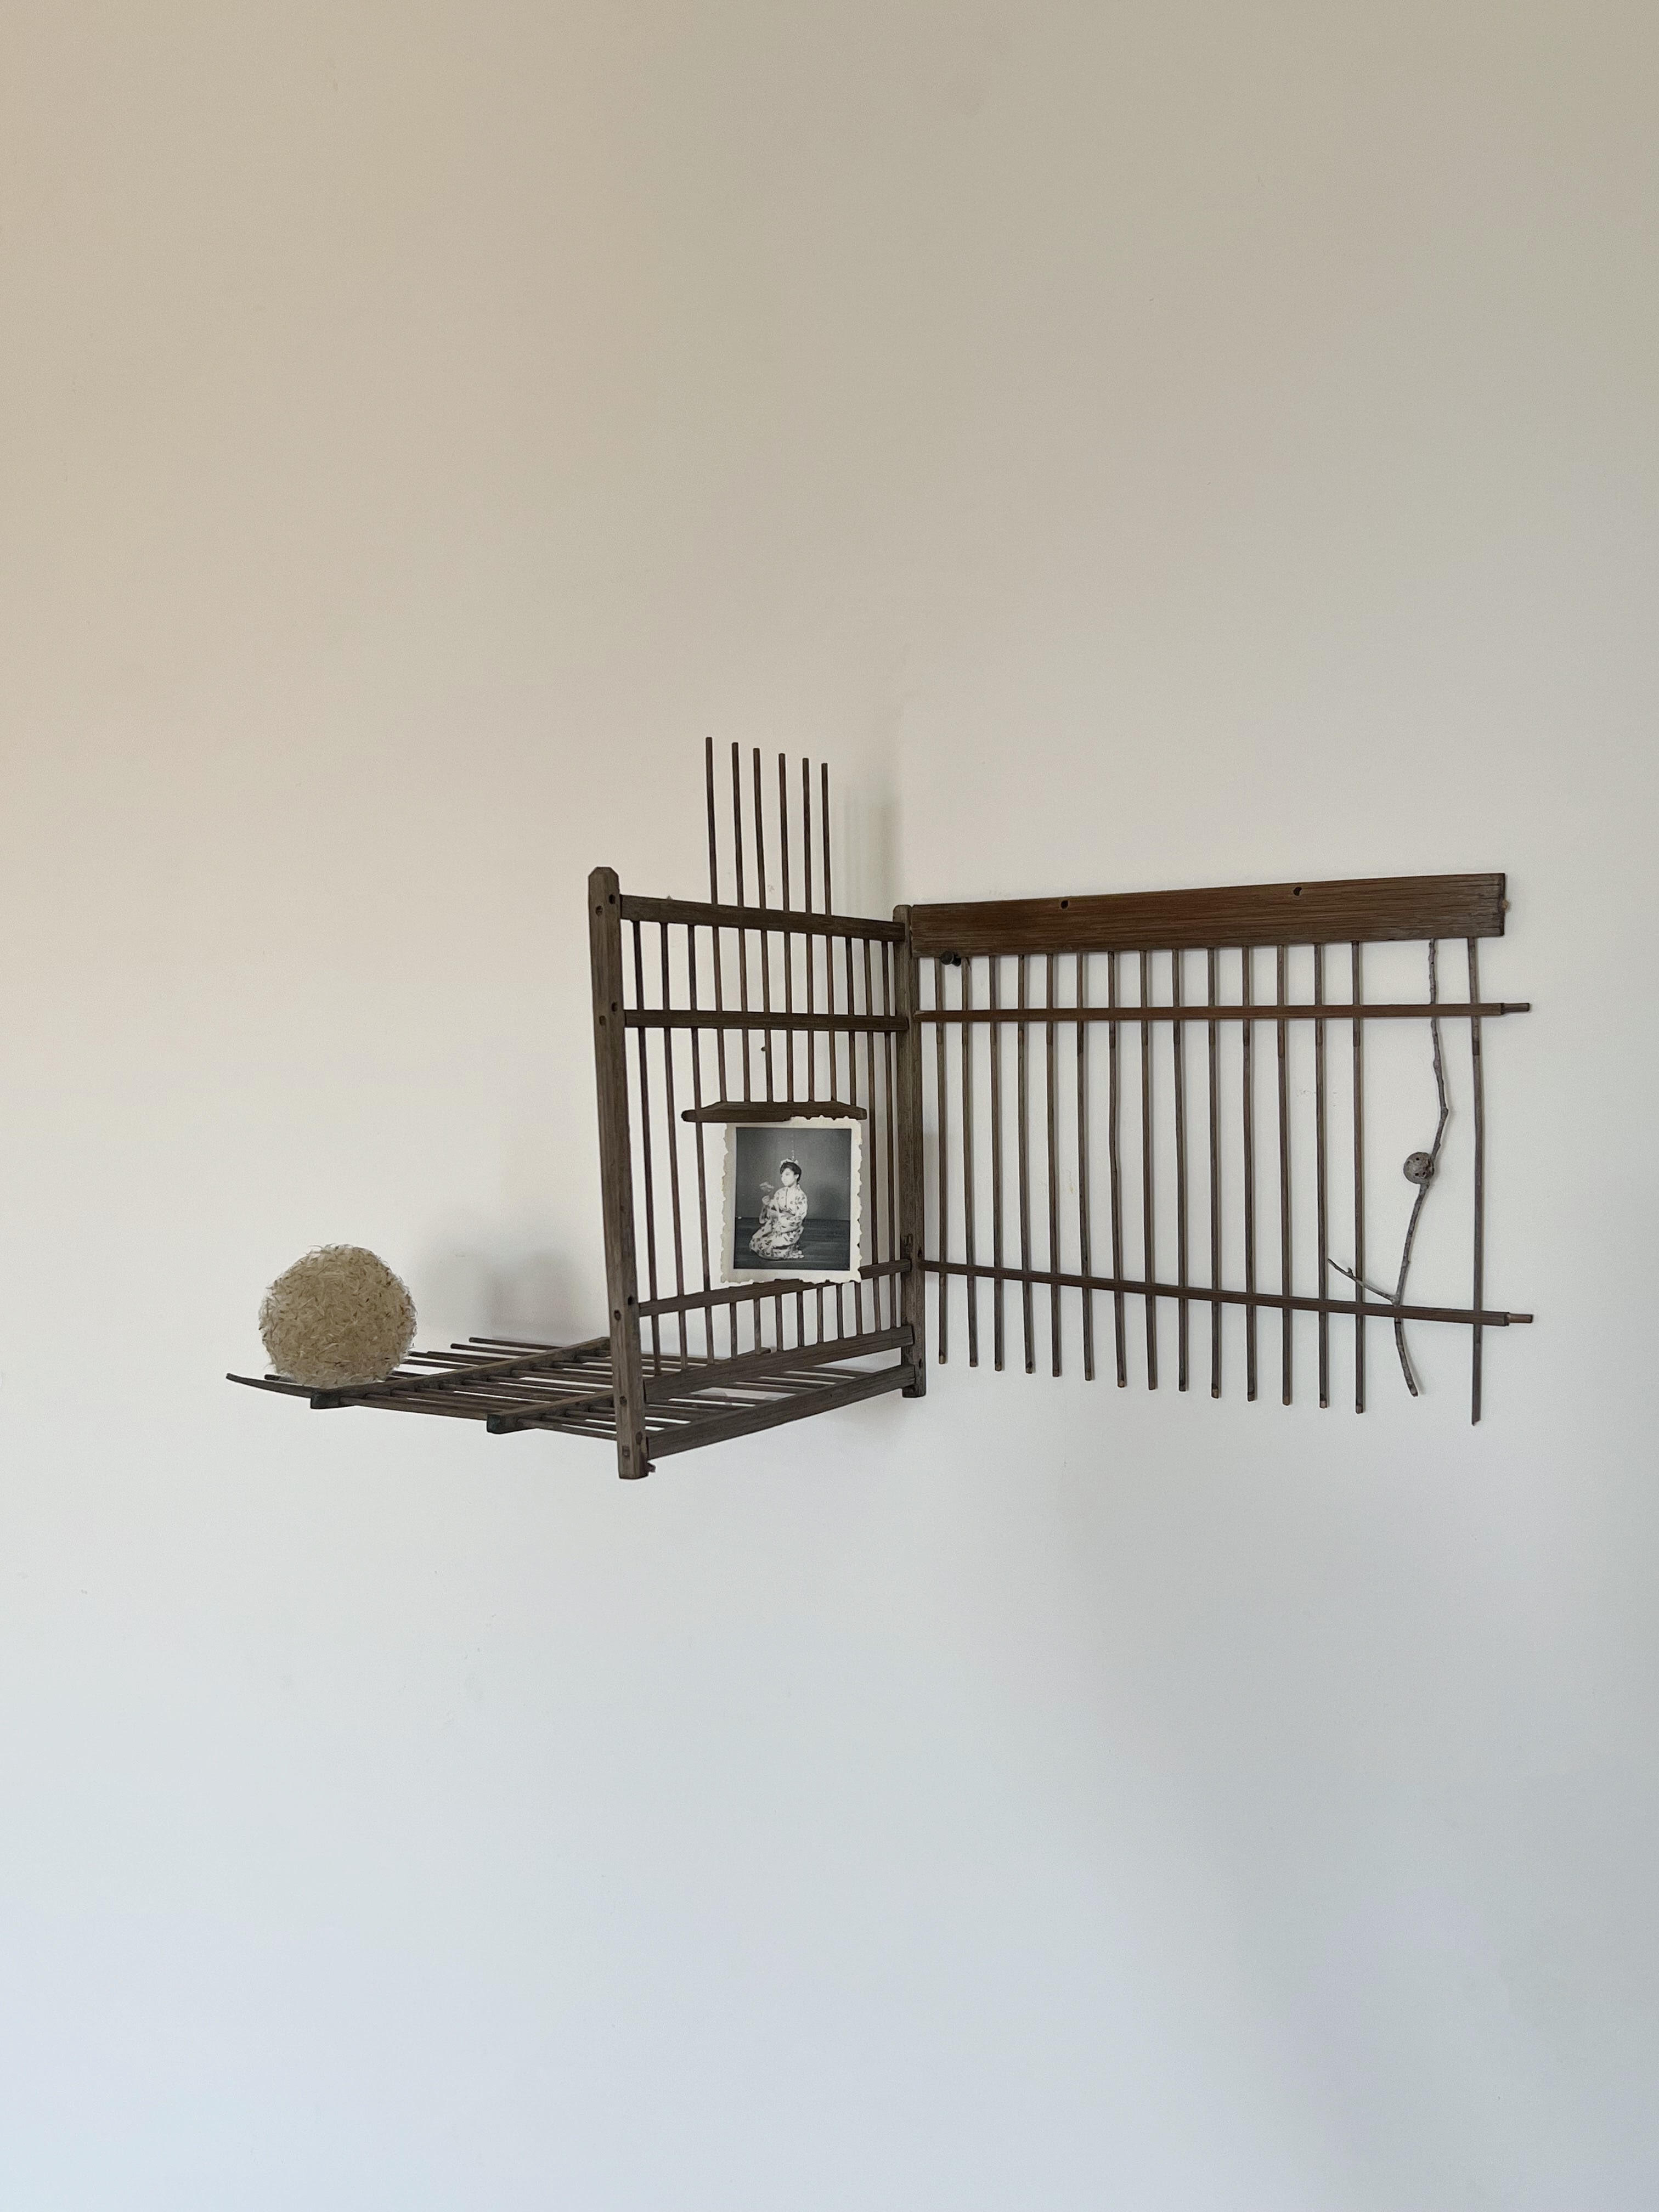 Assemblage 1 (birdcage), From the series Broken treasures